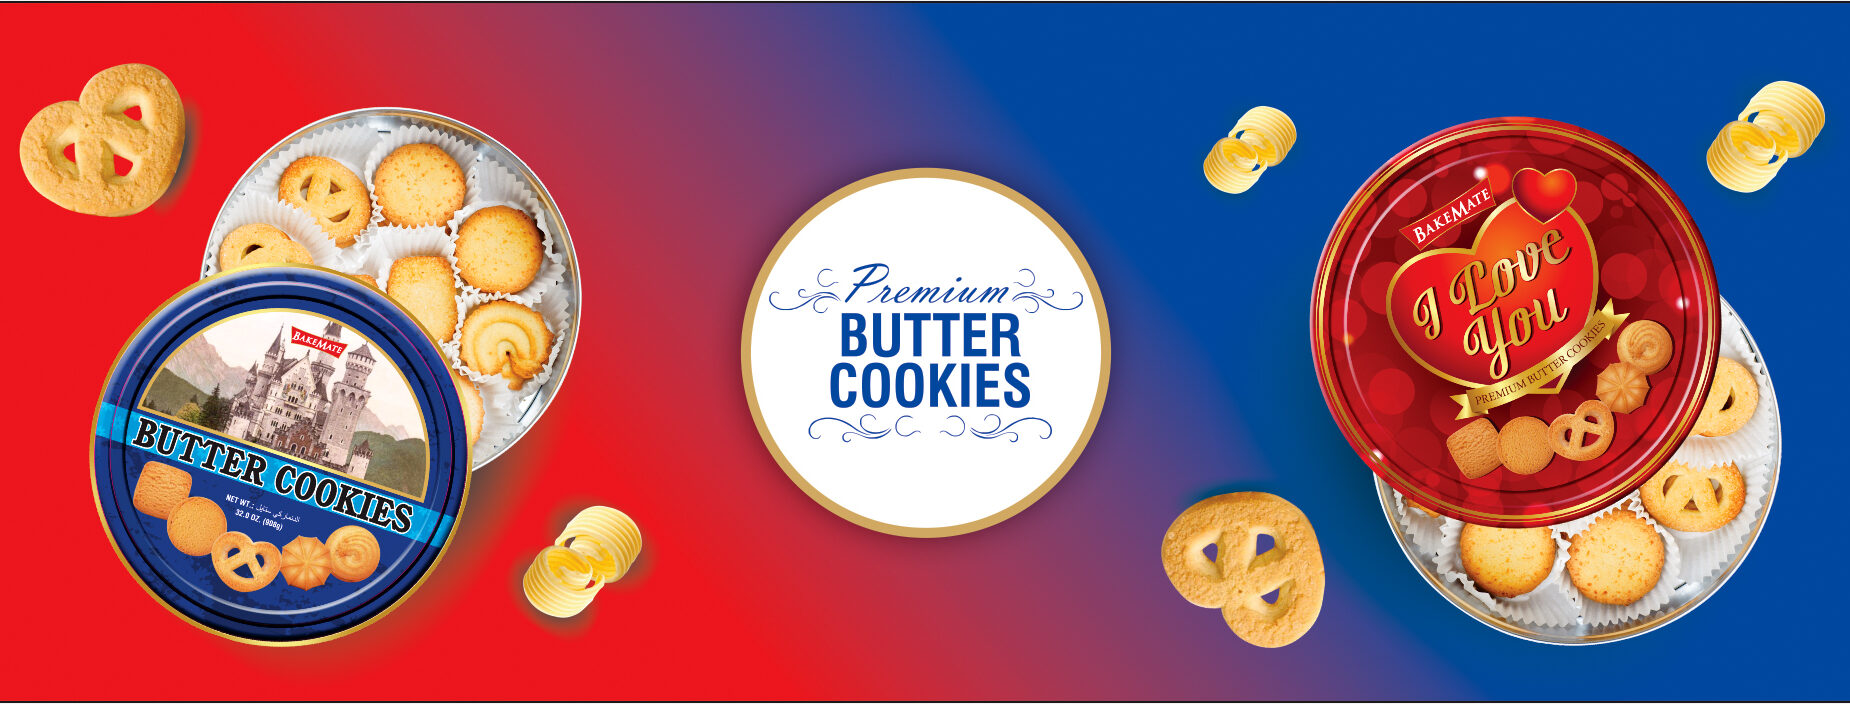 Best Butter Cookies | Premium Butter Biscuits| Bakemate Butter Cookies | Butter Cookies Manufacturers in Hyderabad | Butter Biscuits Manufacturers in Asia | Butter Cookies Manufacturers in India | Biscuit Suppliers in Hyderabad | Butter Cookies Manufacturers |